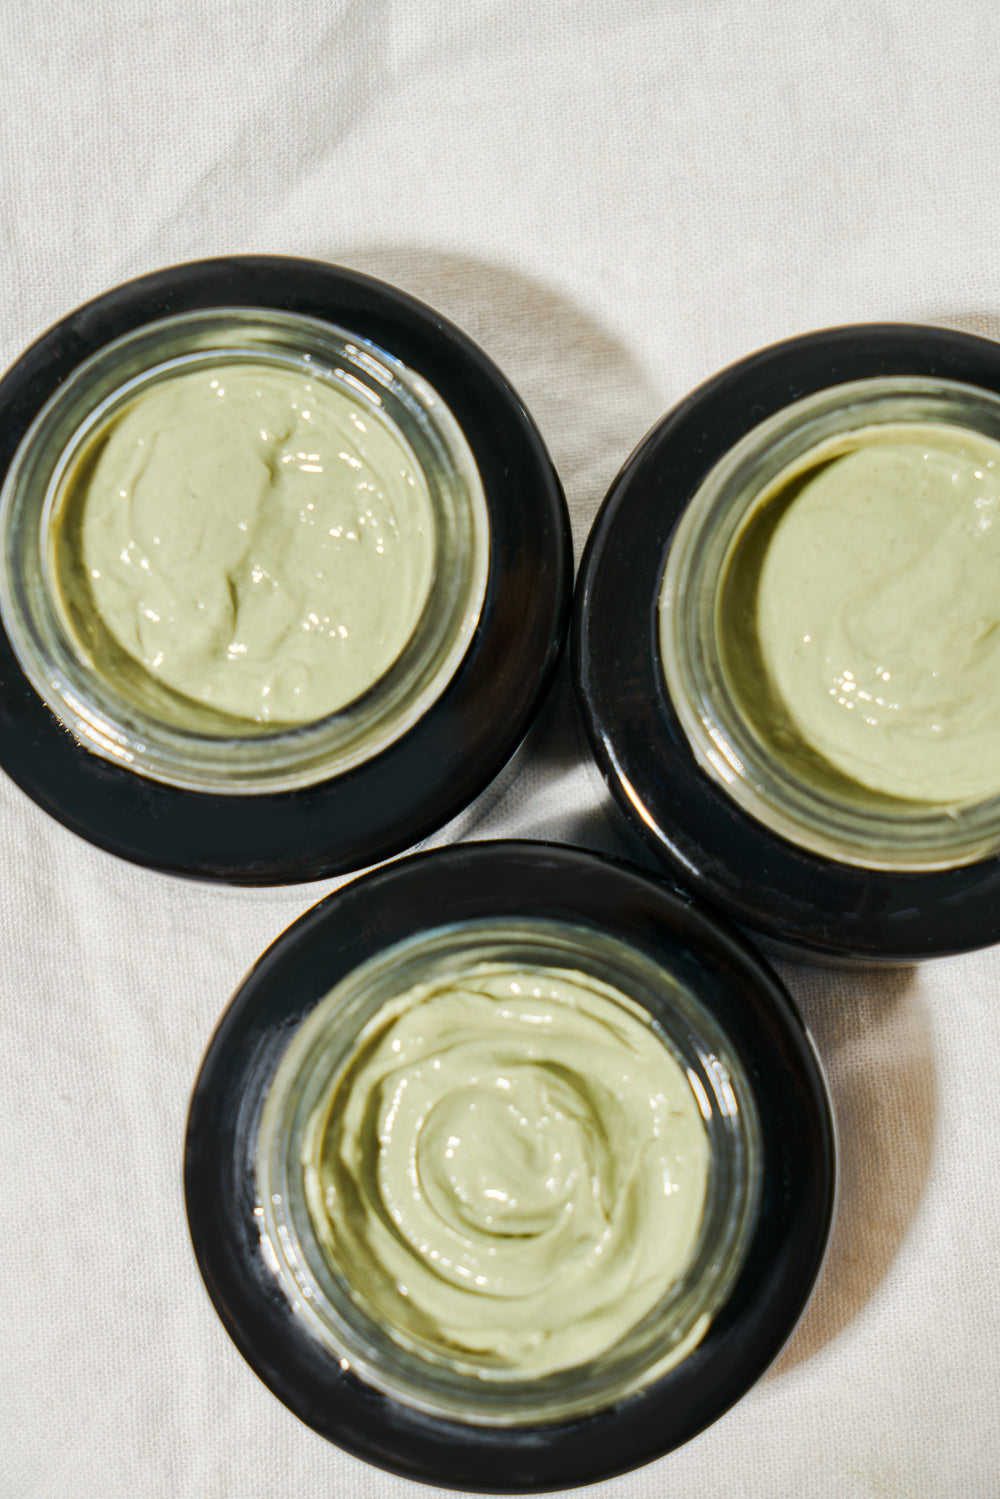 MARA Volcanic Sea Clay Detox Masque jars open with green product